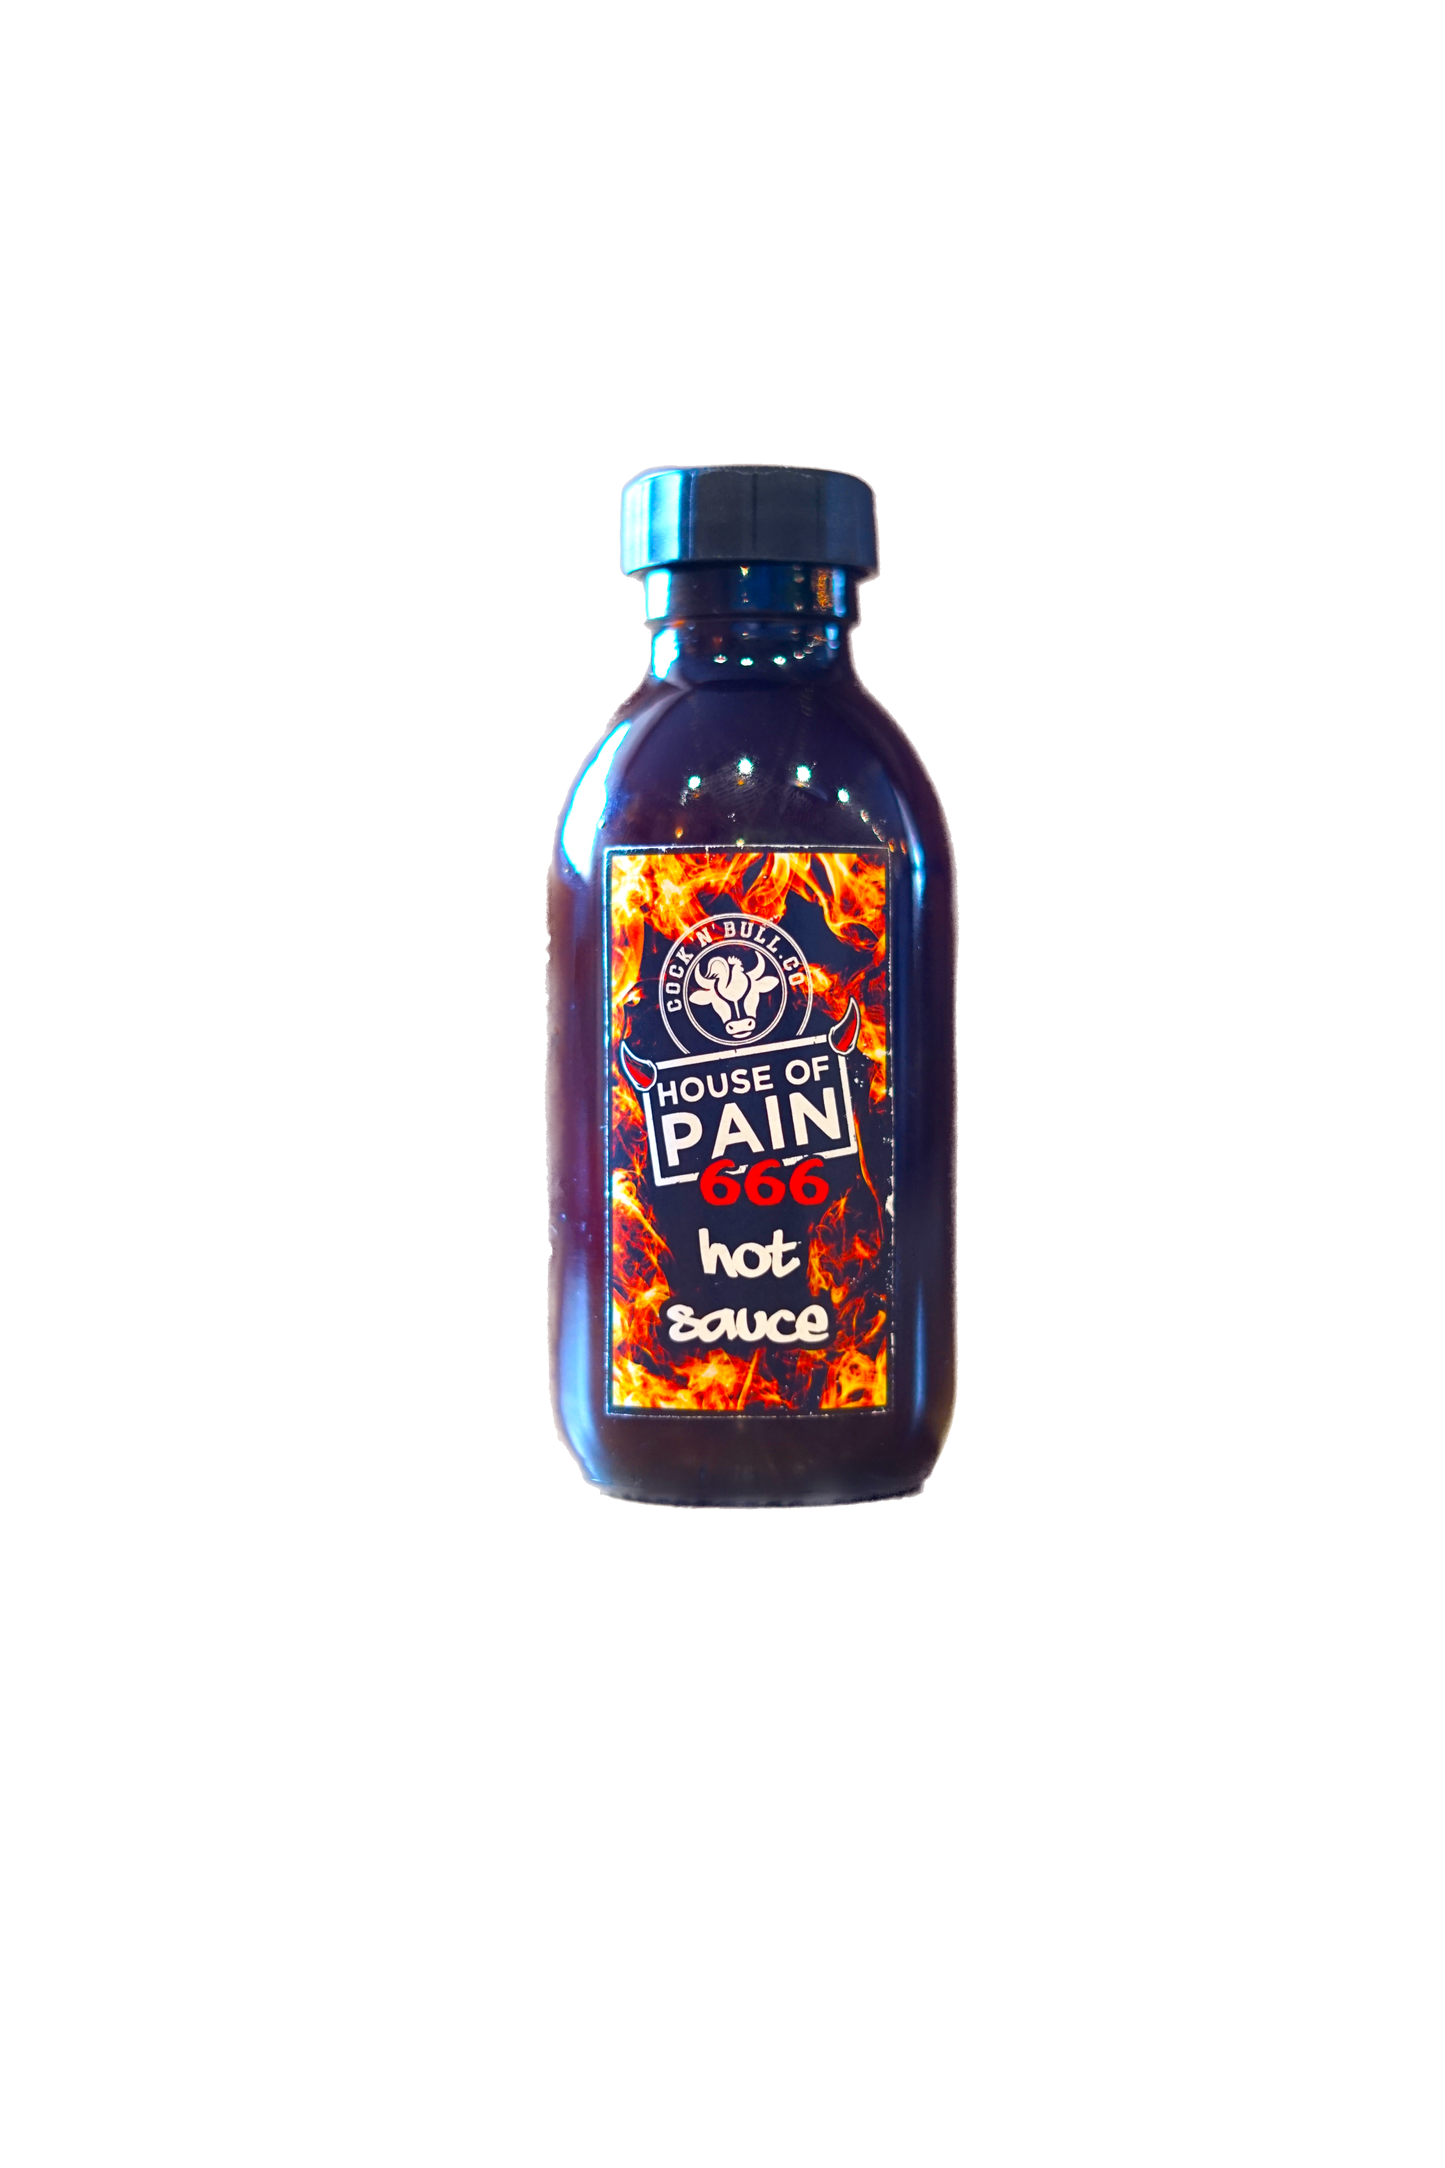 Cock'n'Bull House of Pain 666 Hot Sauce